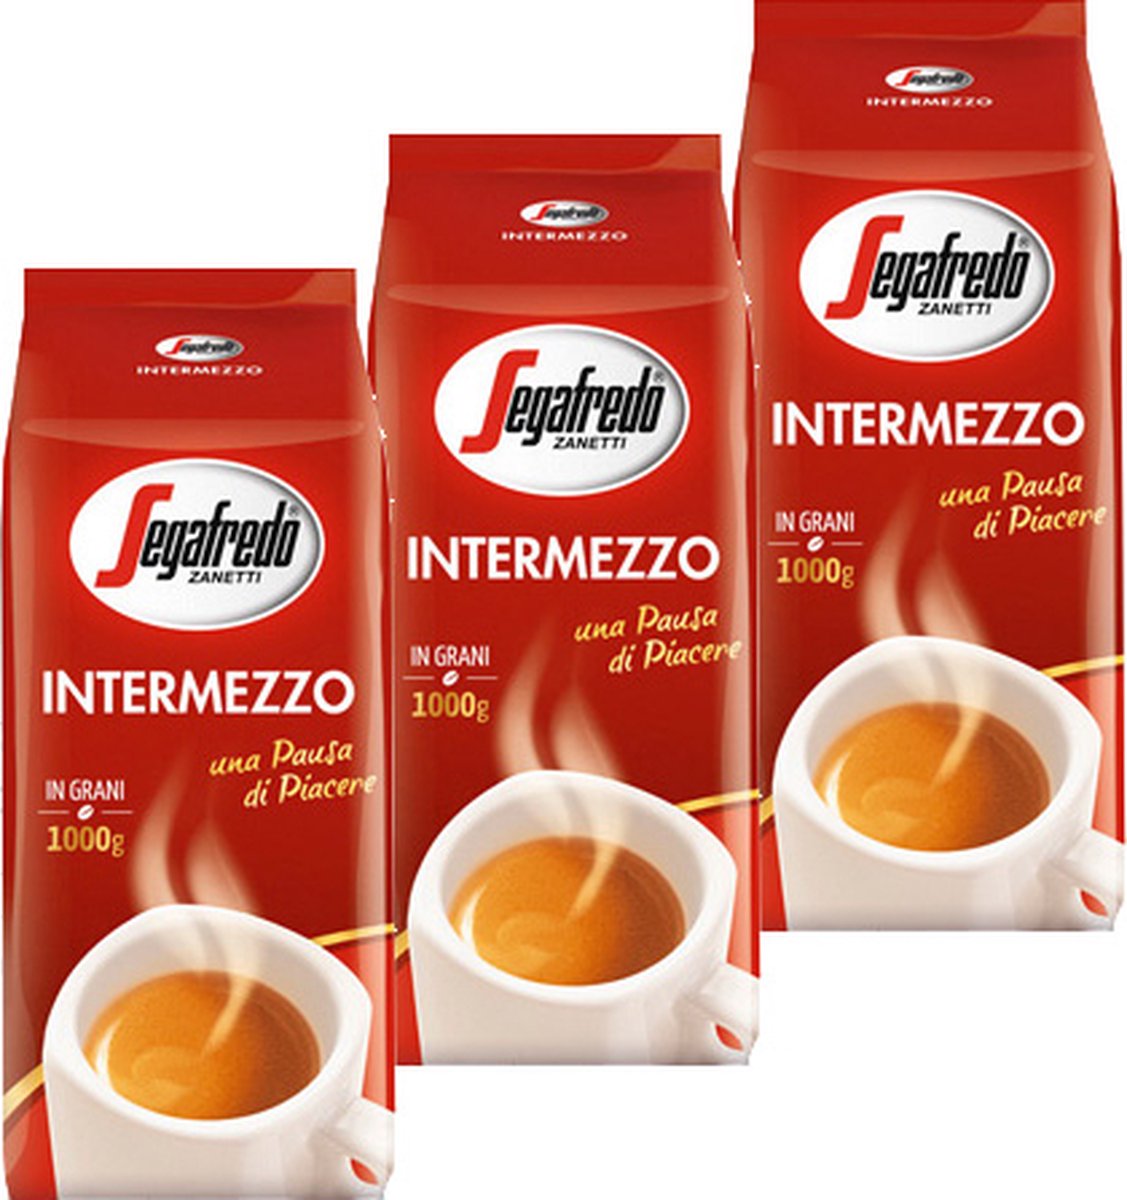 Café en Grains Segafredo Intermezzo Crema - 1 Kg